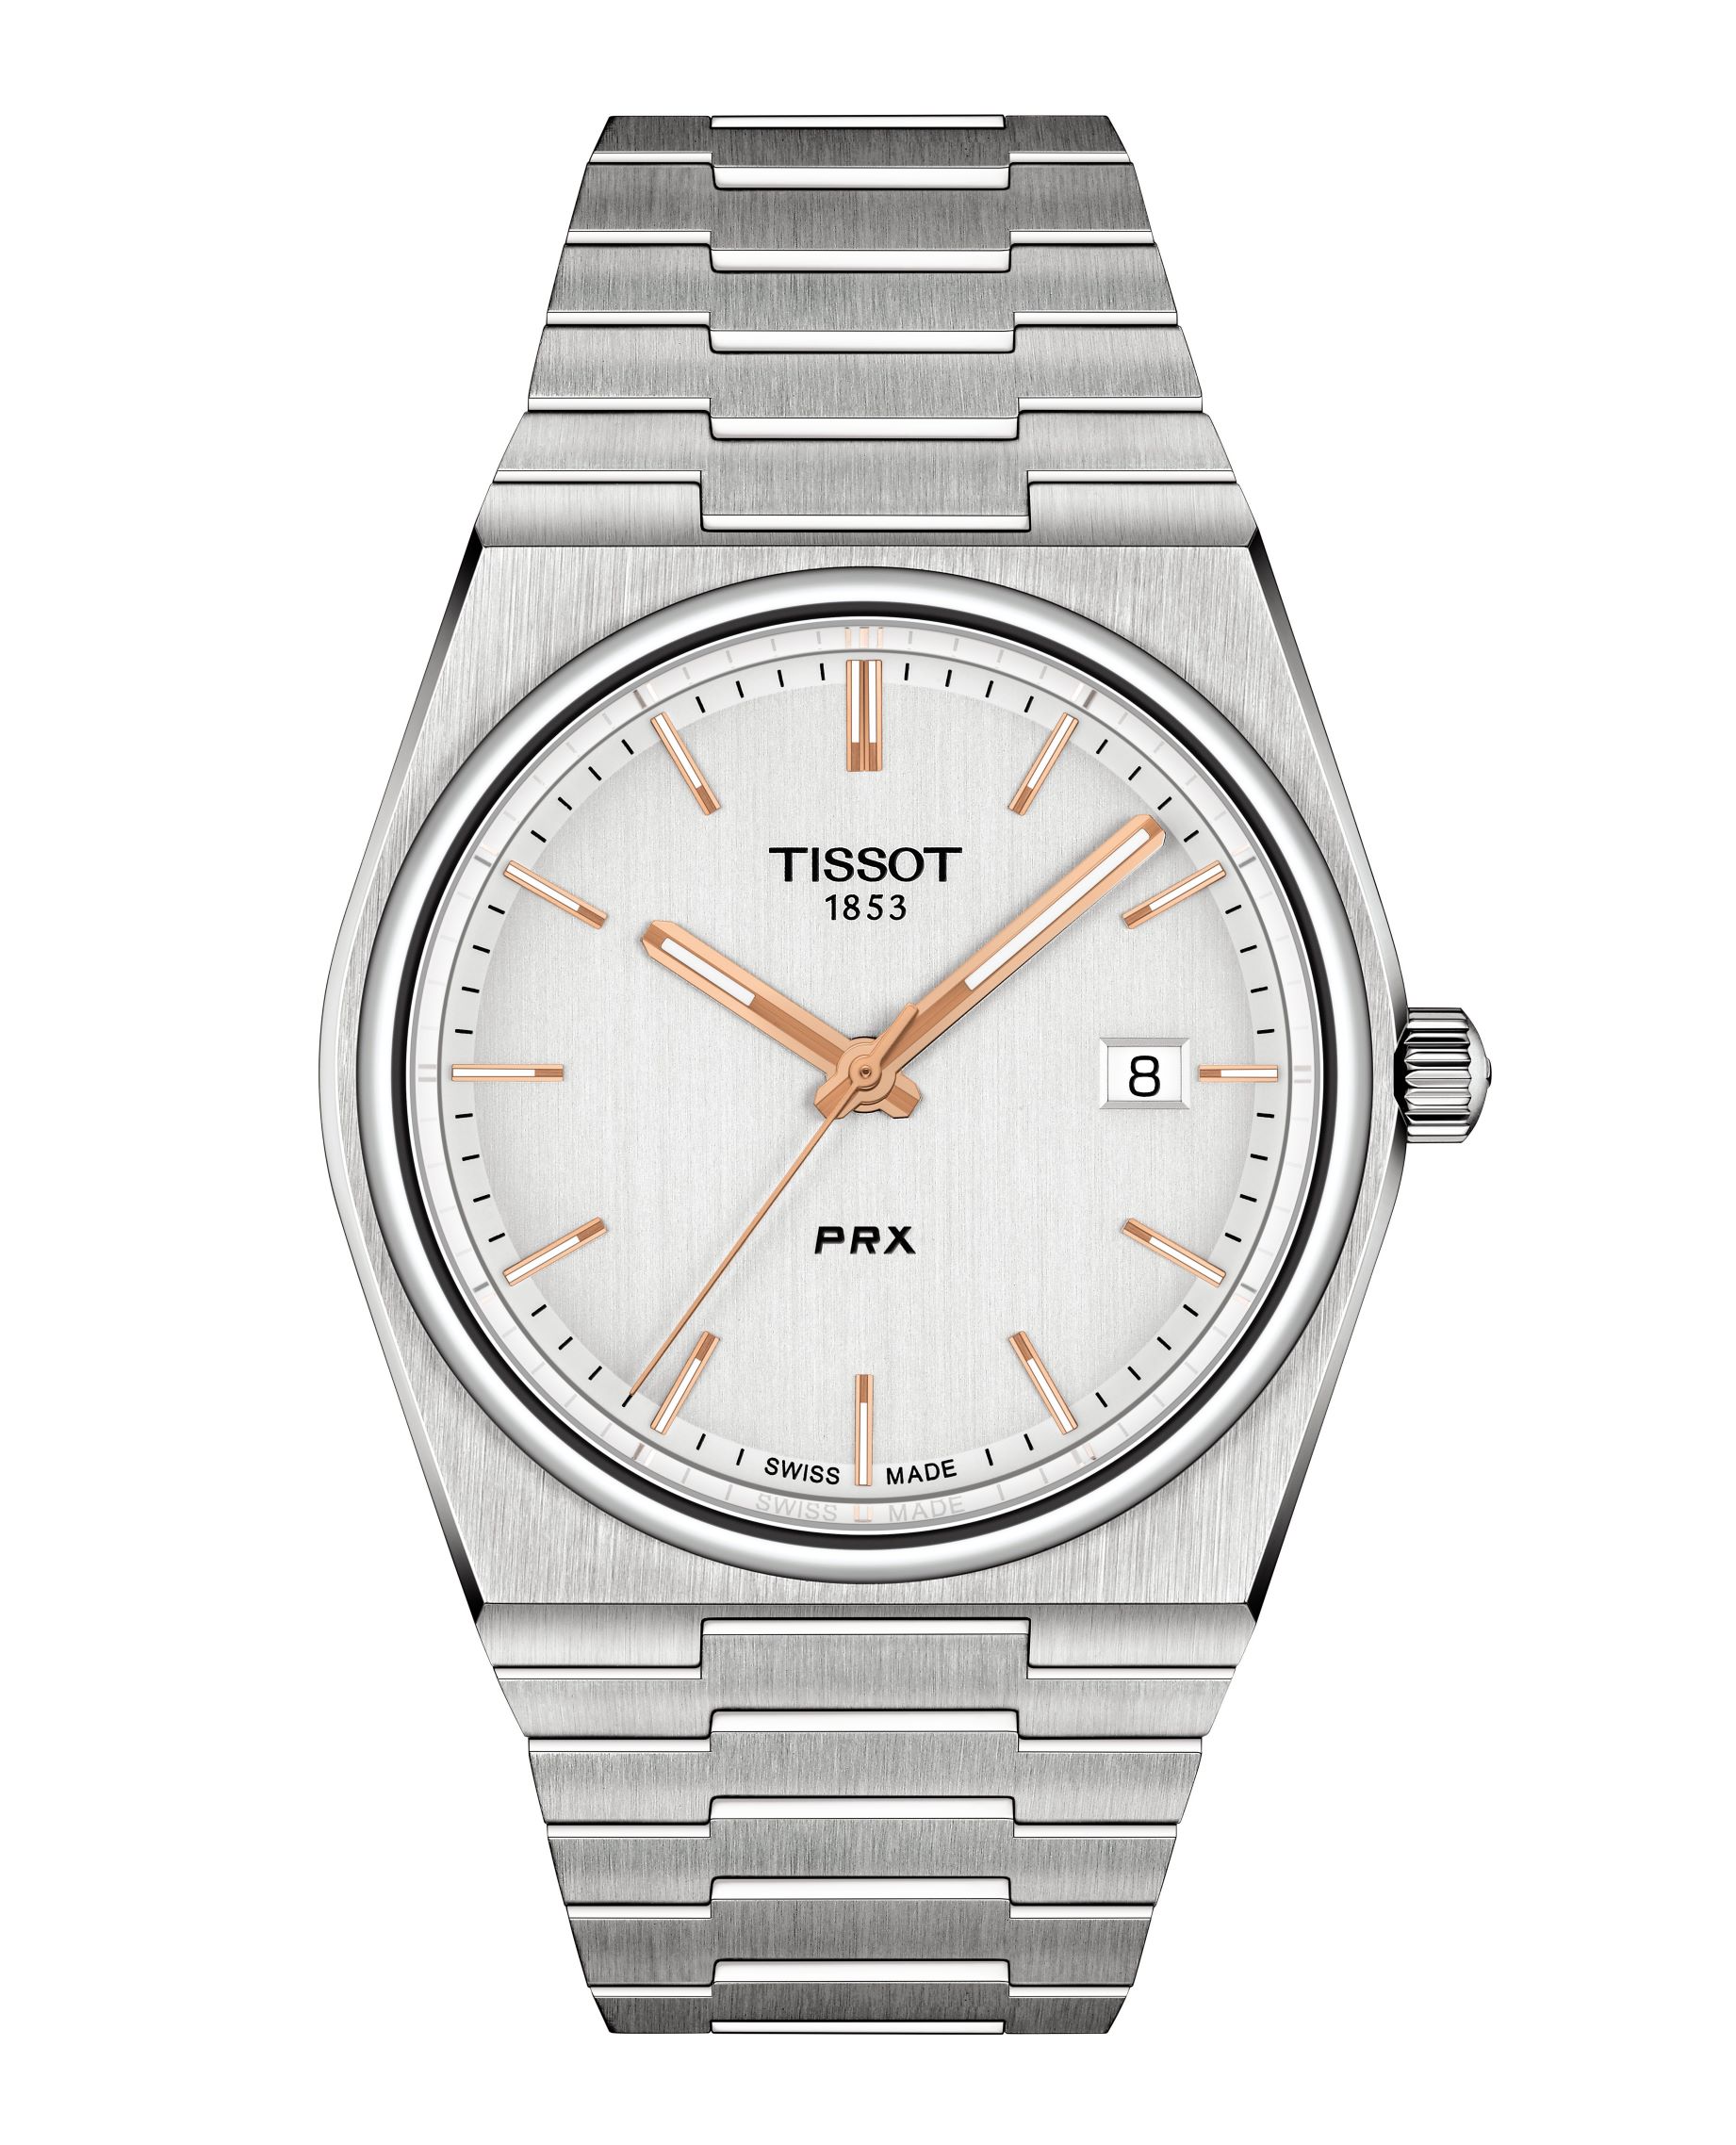 Tissot PRX ทิสโซต์ พีอาร์เอ็กซ์ T1374101103100 สีเงิน นาฬิกาผู้ชาย